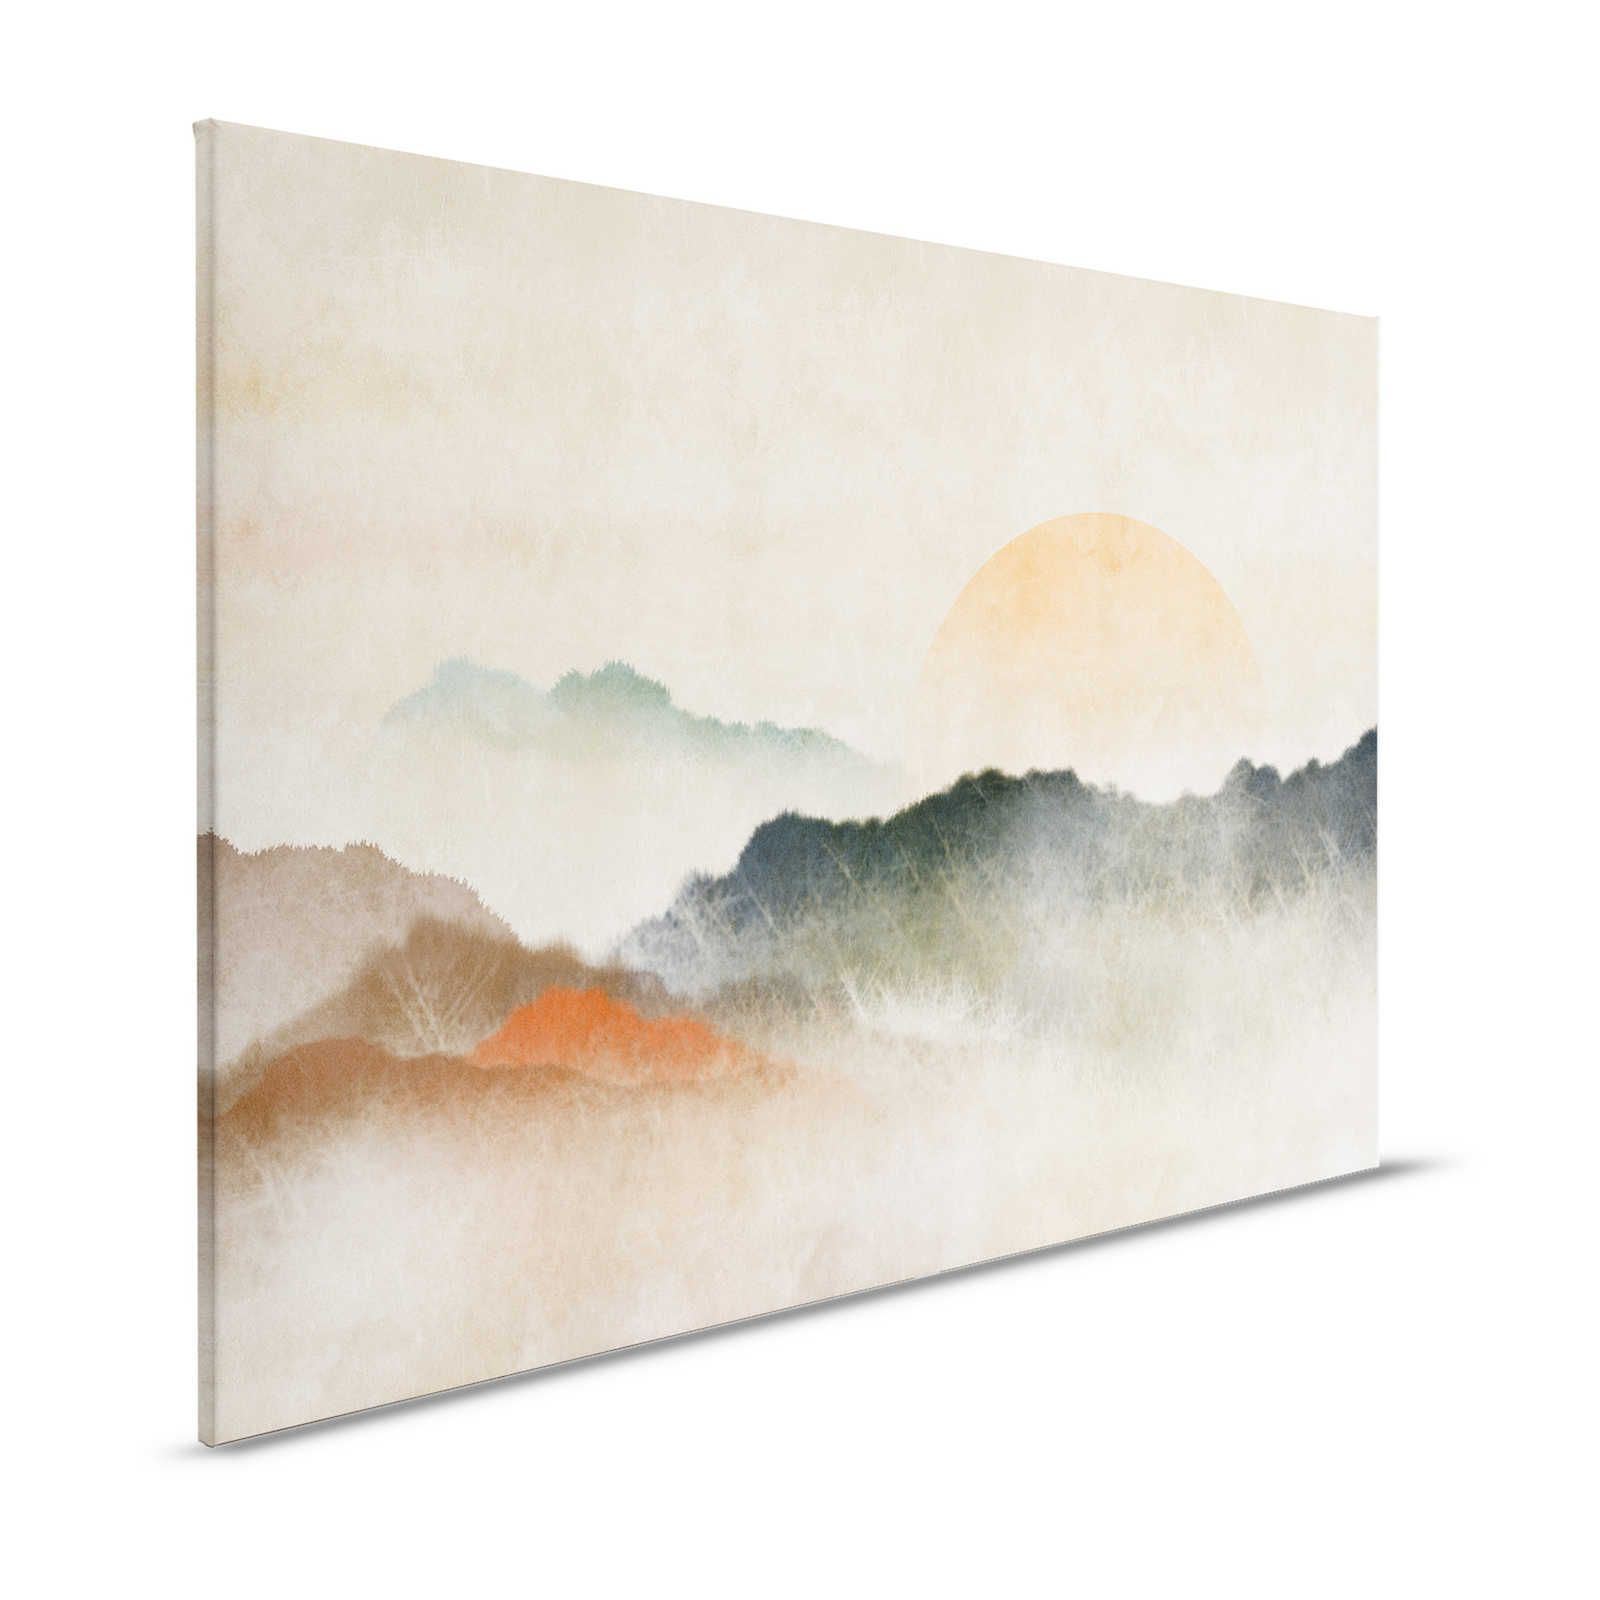 Akaishi 3 - Canvas painting Sunrise, Asia Style Art Print - 1.20 m x 0.80 m
